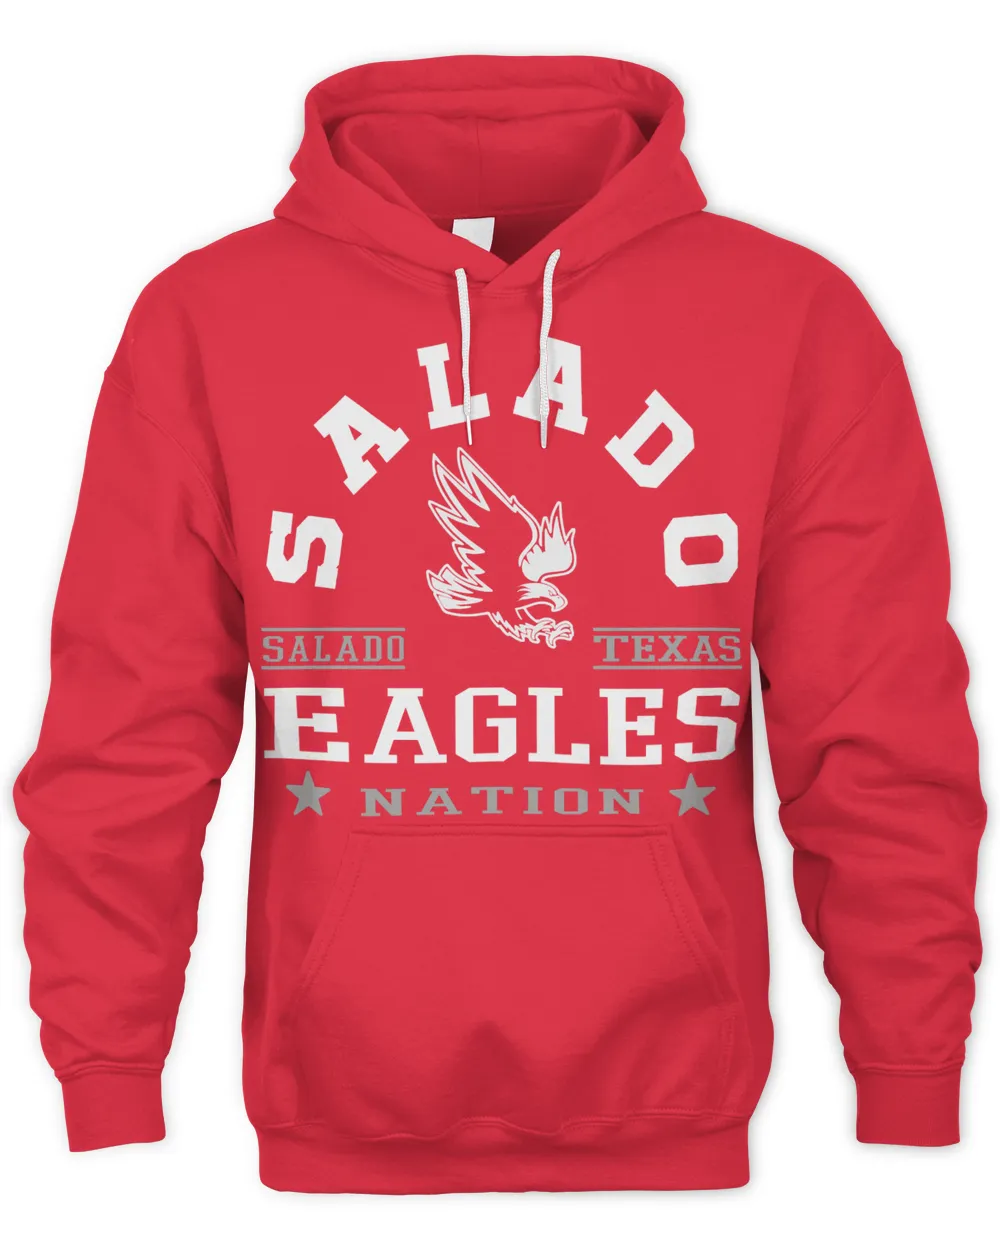 Alumni Salado Eagles Nation TX